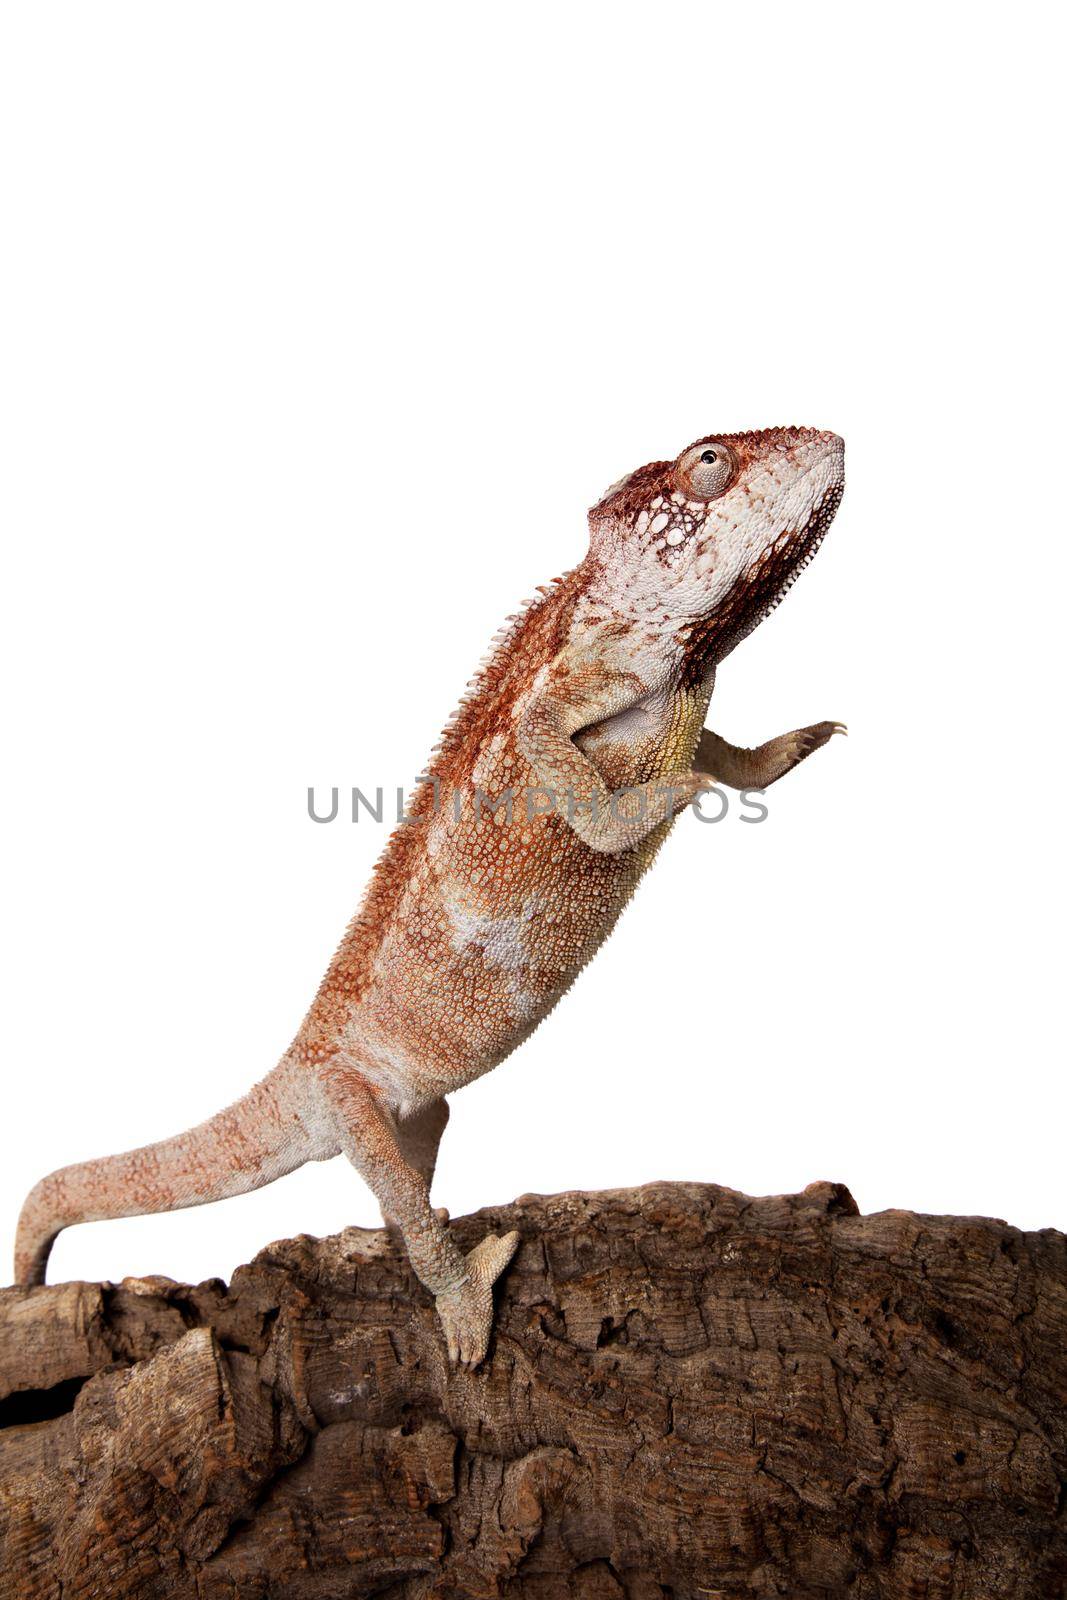 The Oustalet's or Malagasy giant chameleon, Furcifer oustaleti, female isolated on white